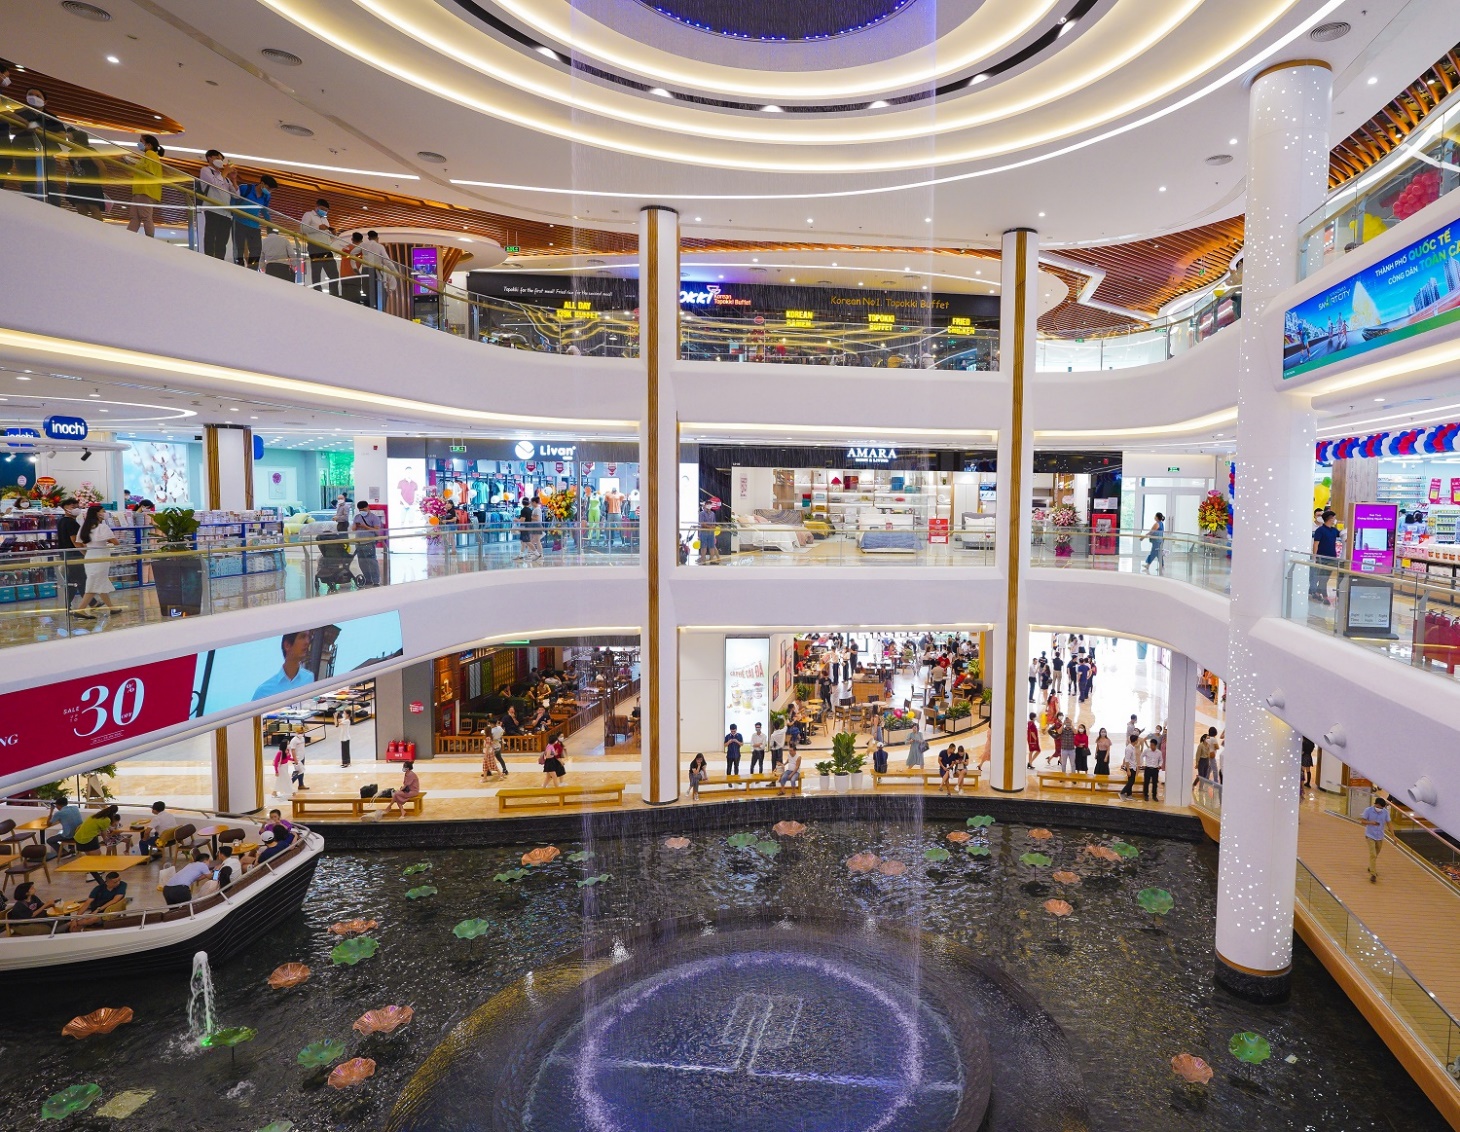 Opening of Vincom Mega Mall Smart City 